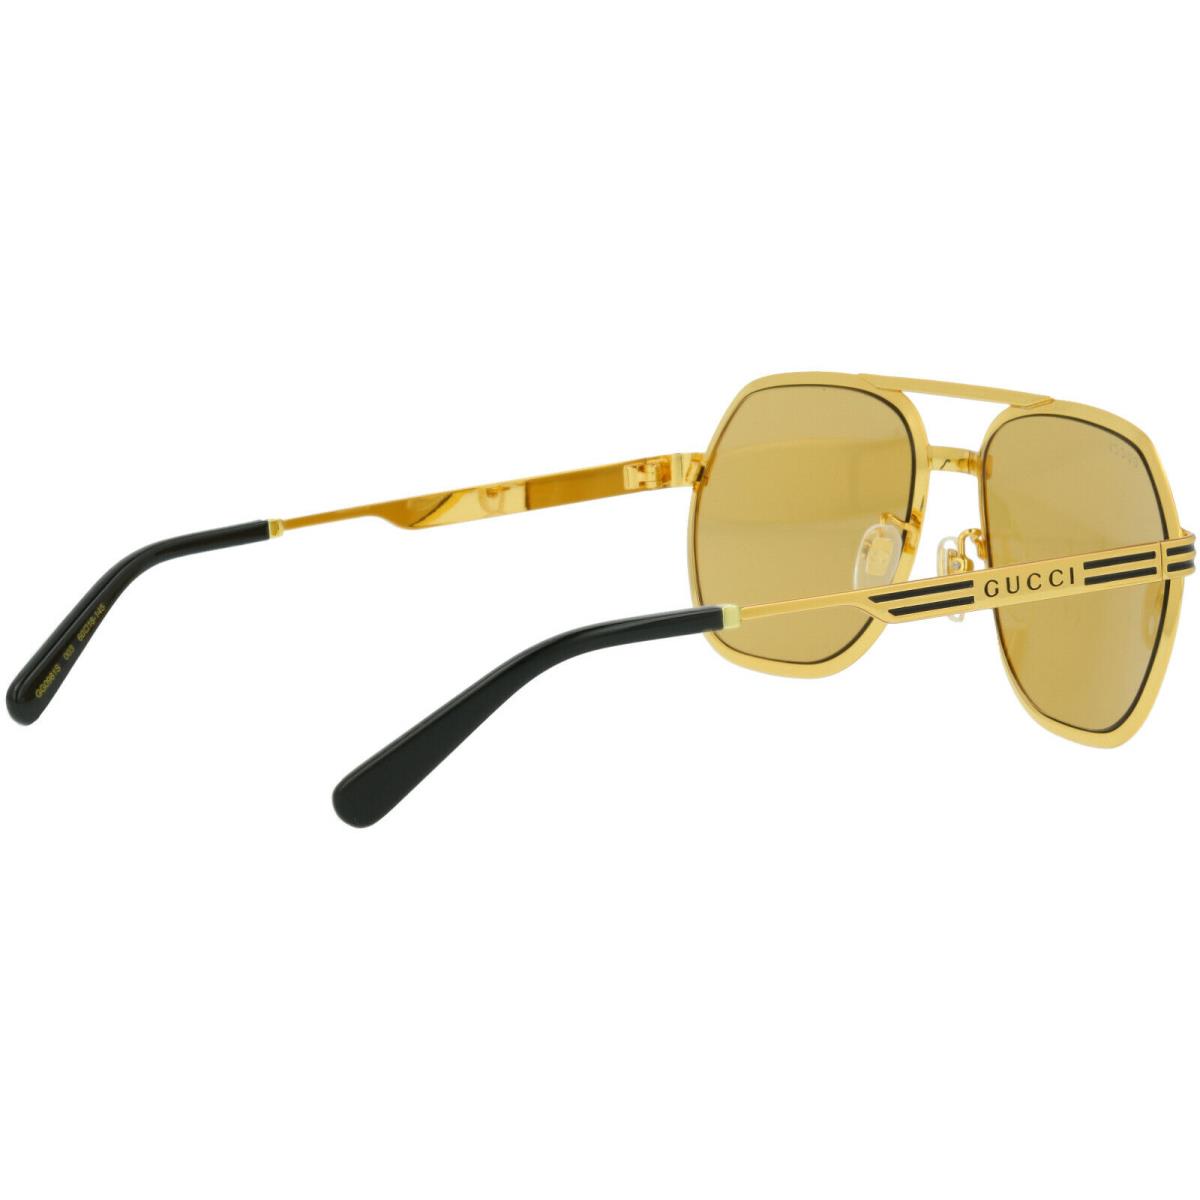 Gucci sunglasses  - Gold Frame, Gold Lens 2